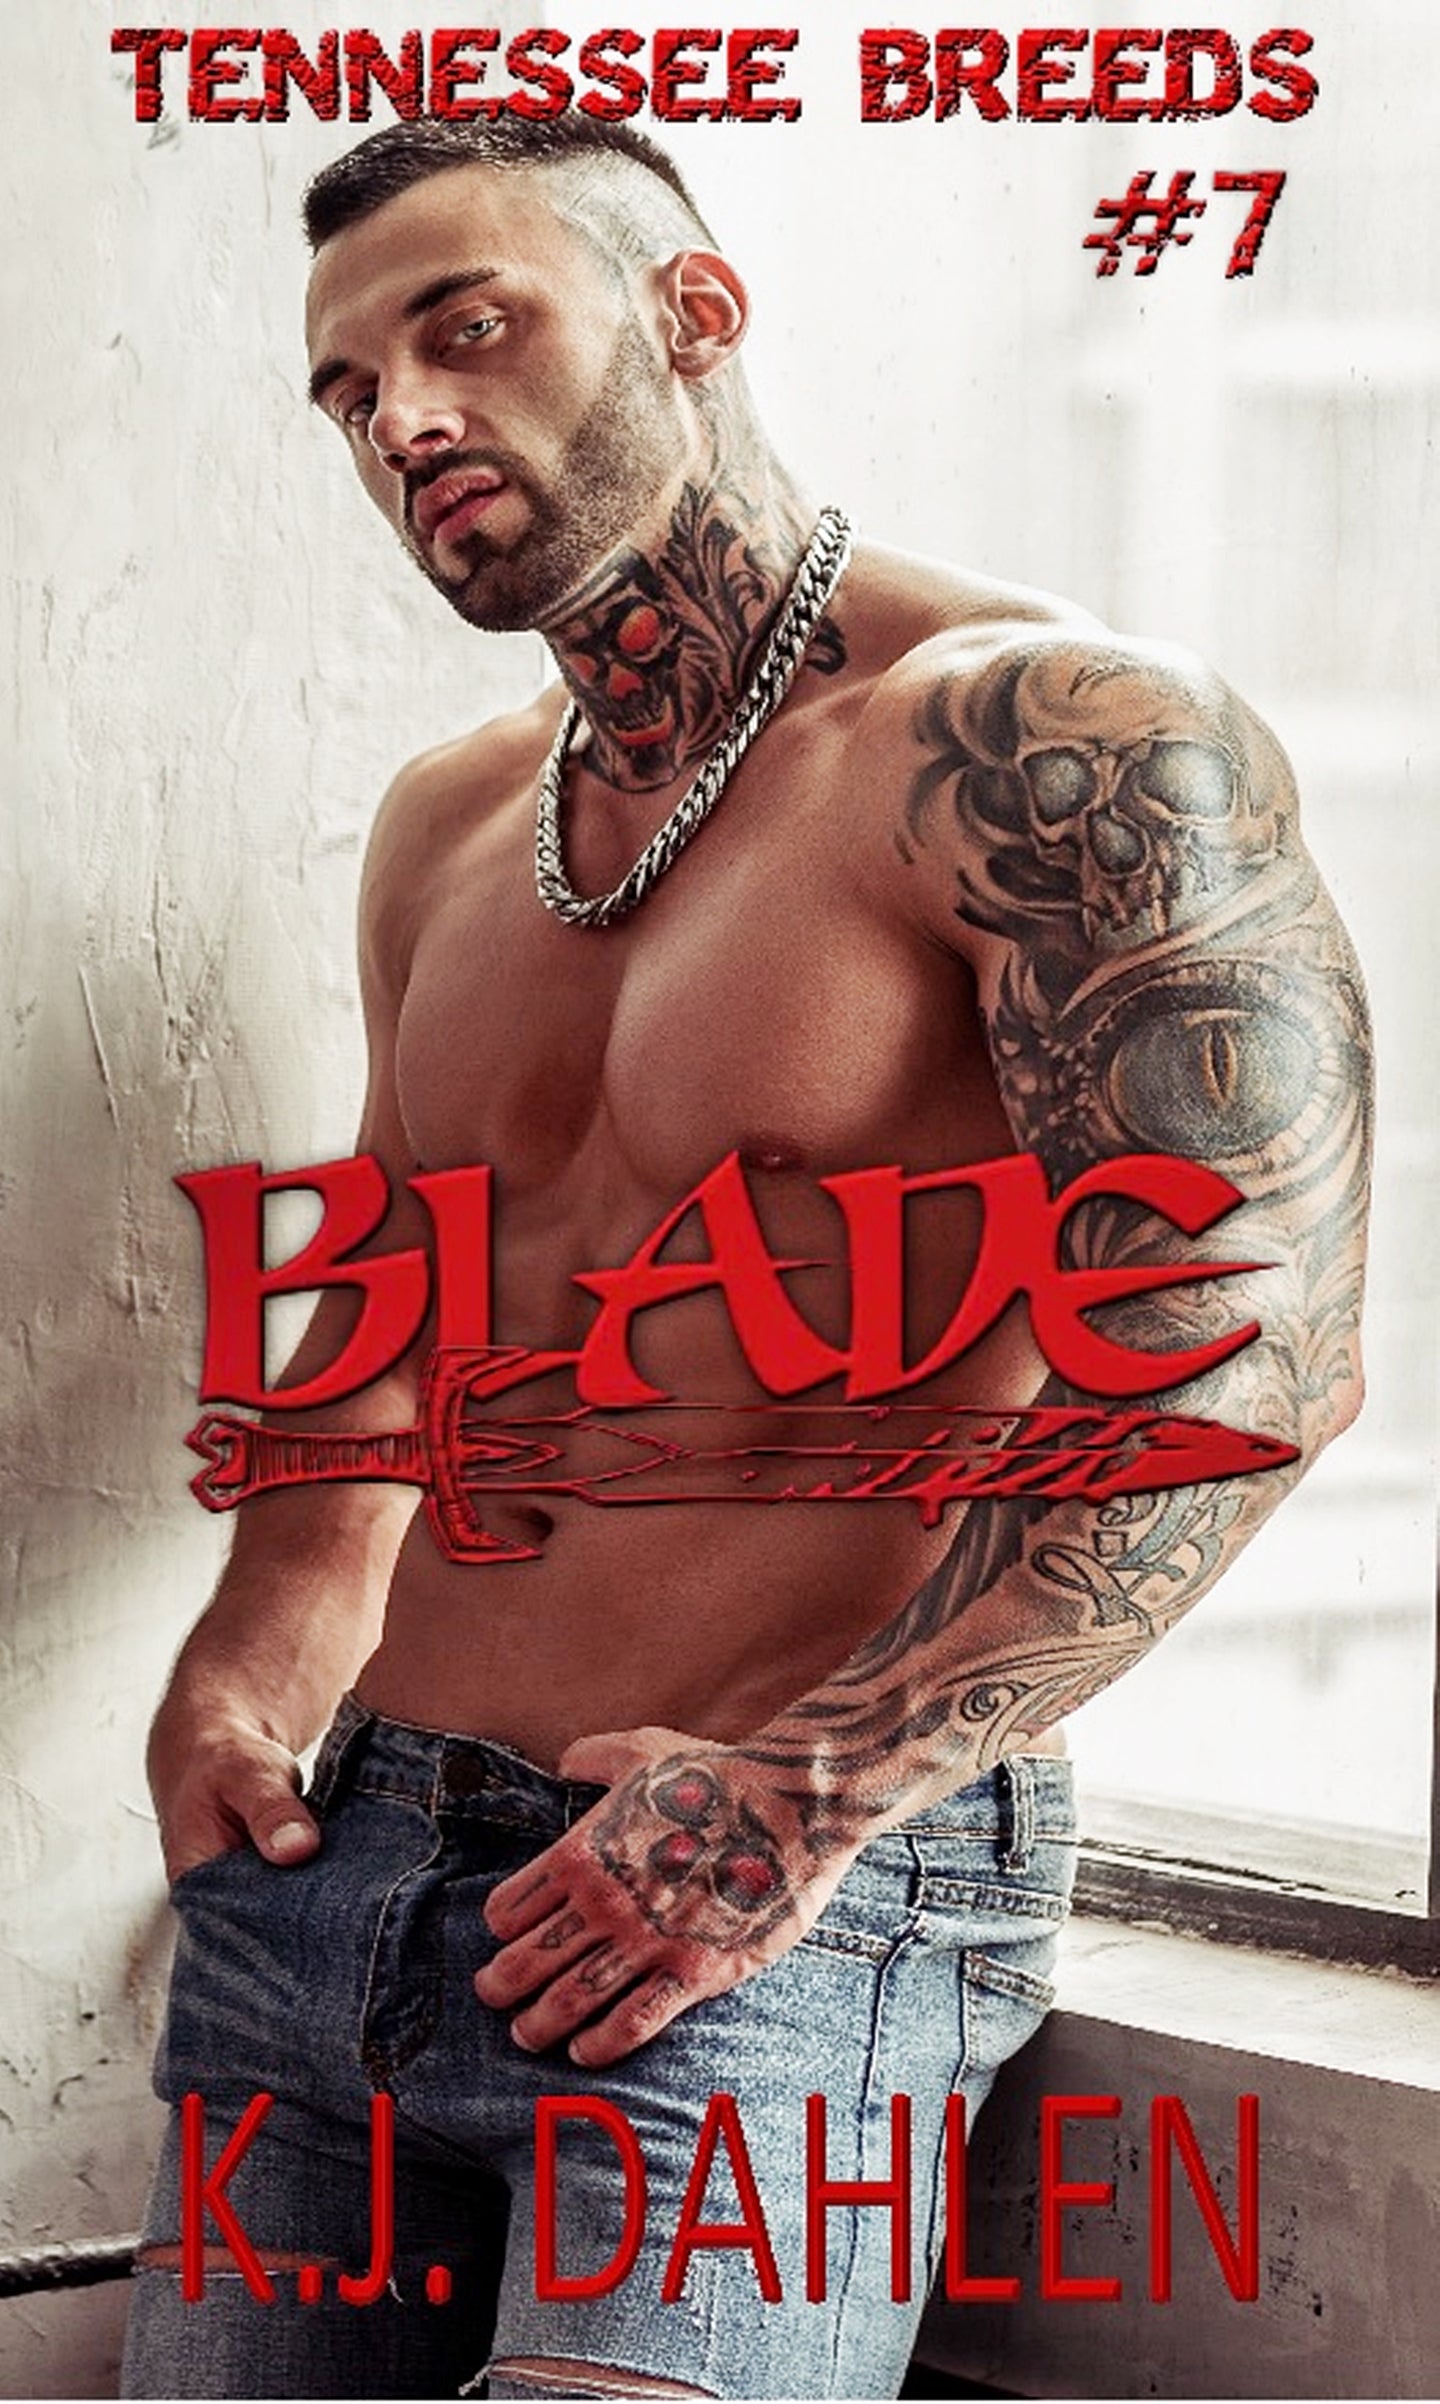 Blade-Tennessee-Breeds-#7-Single